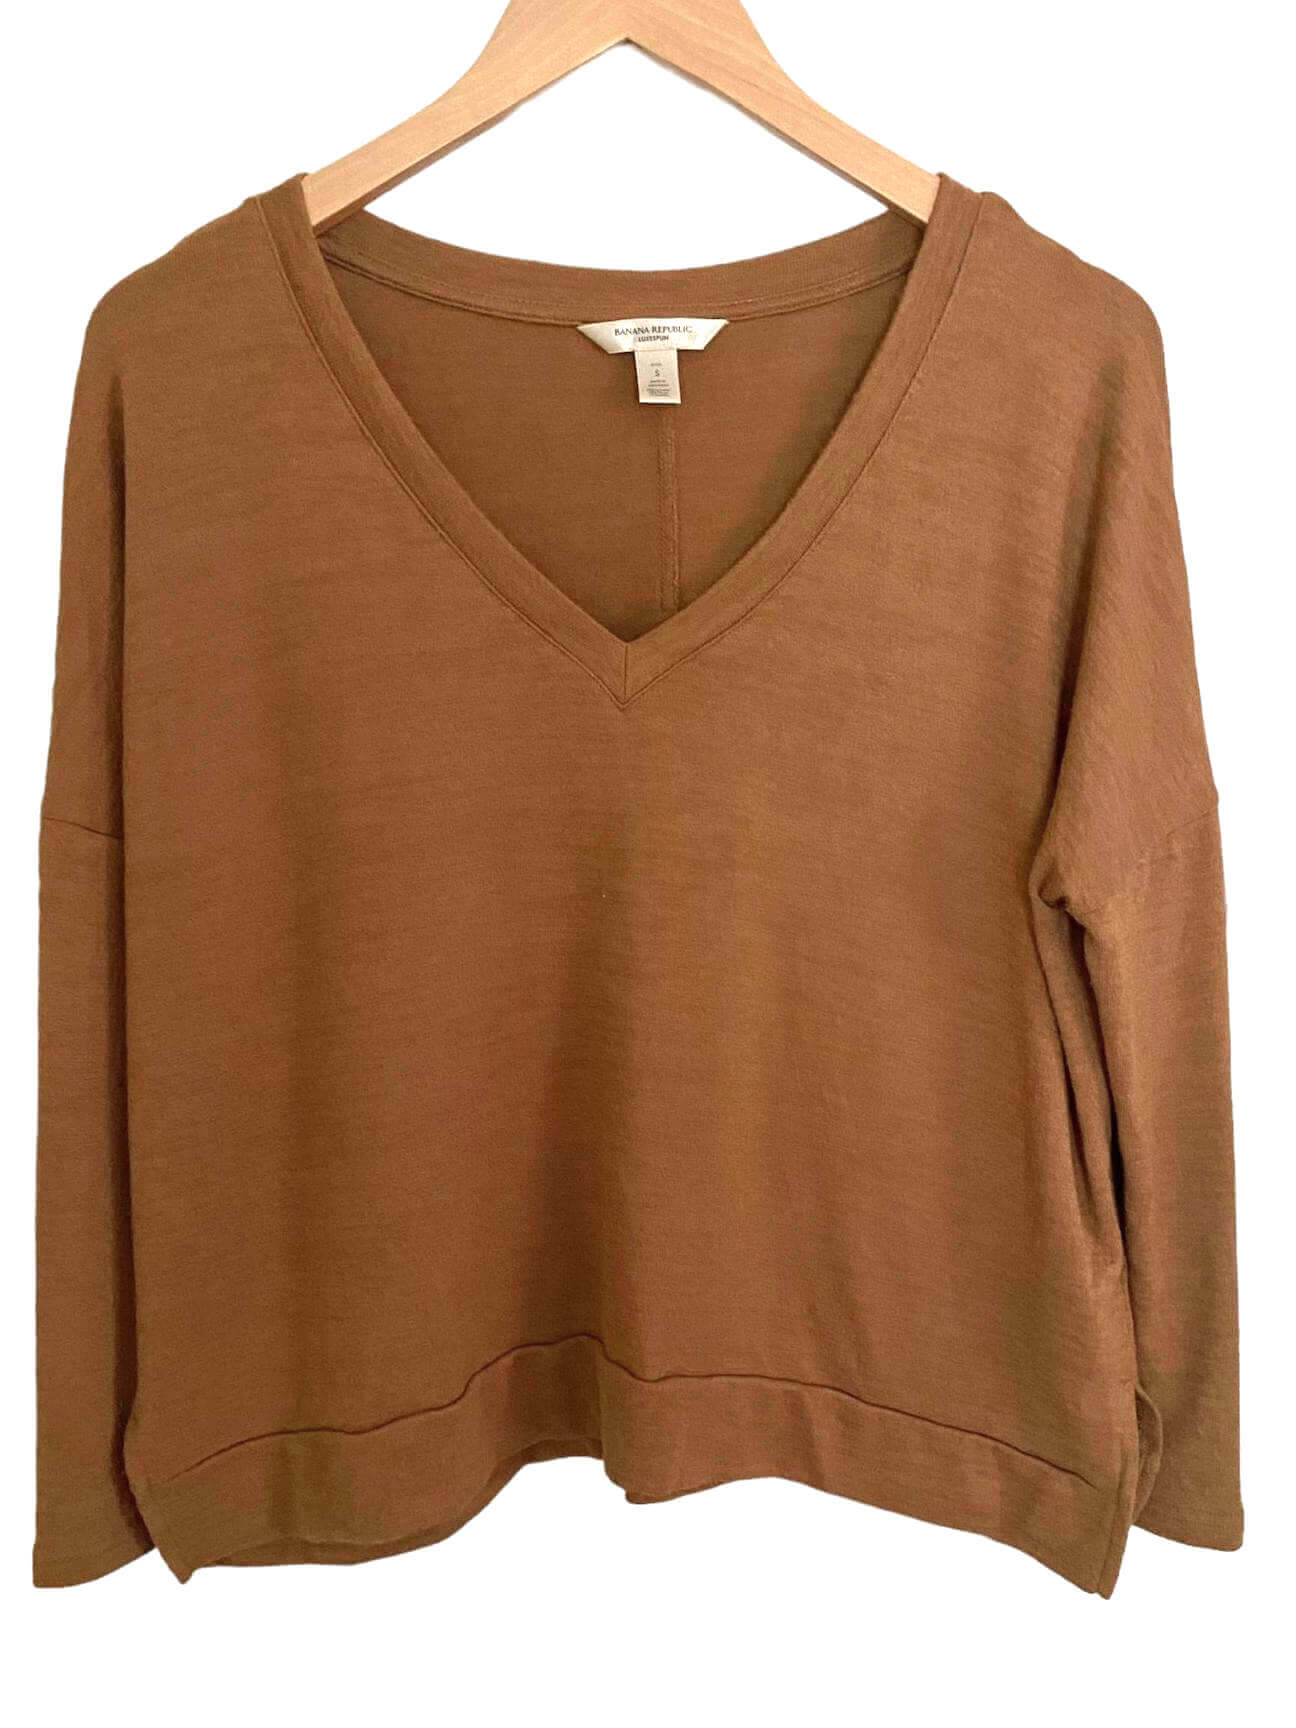 Light Spring BANANA REPUBLIC v-neck brown sweater top